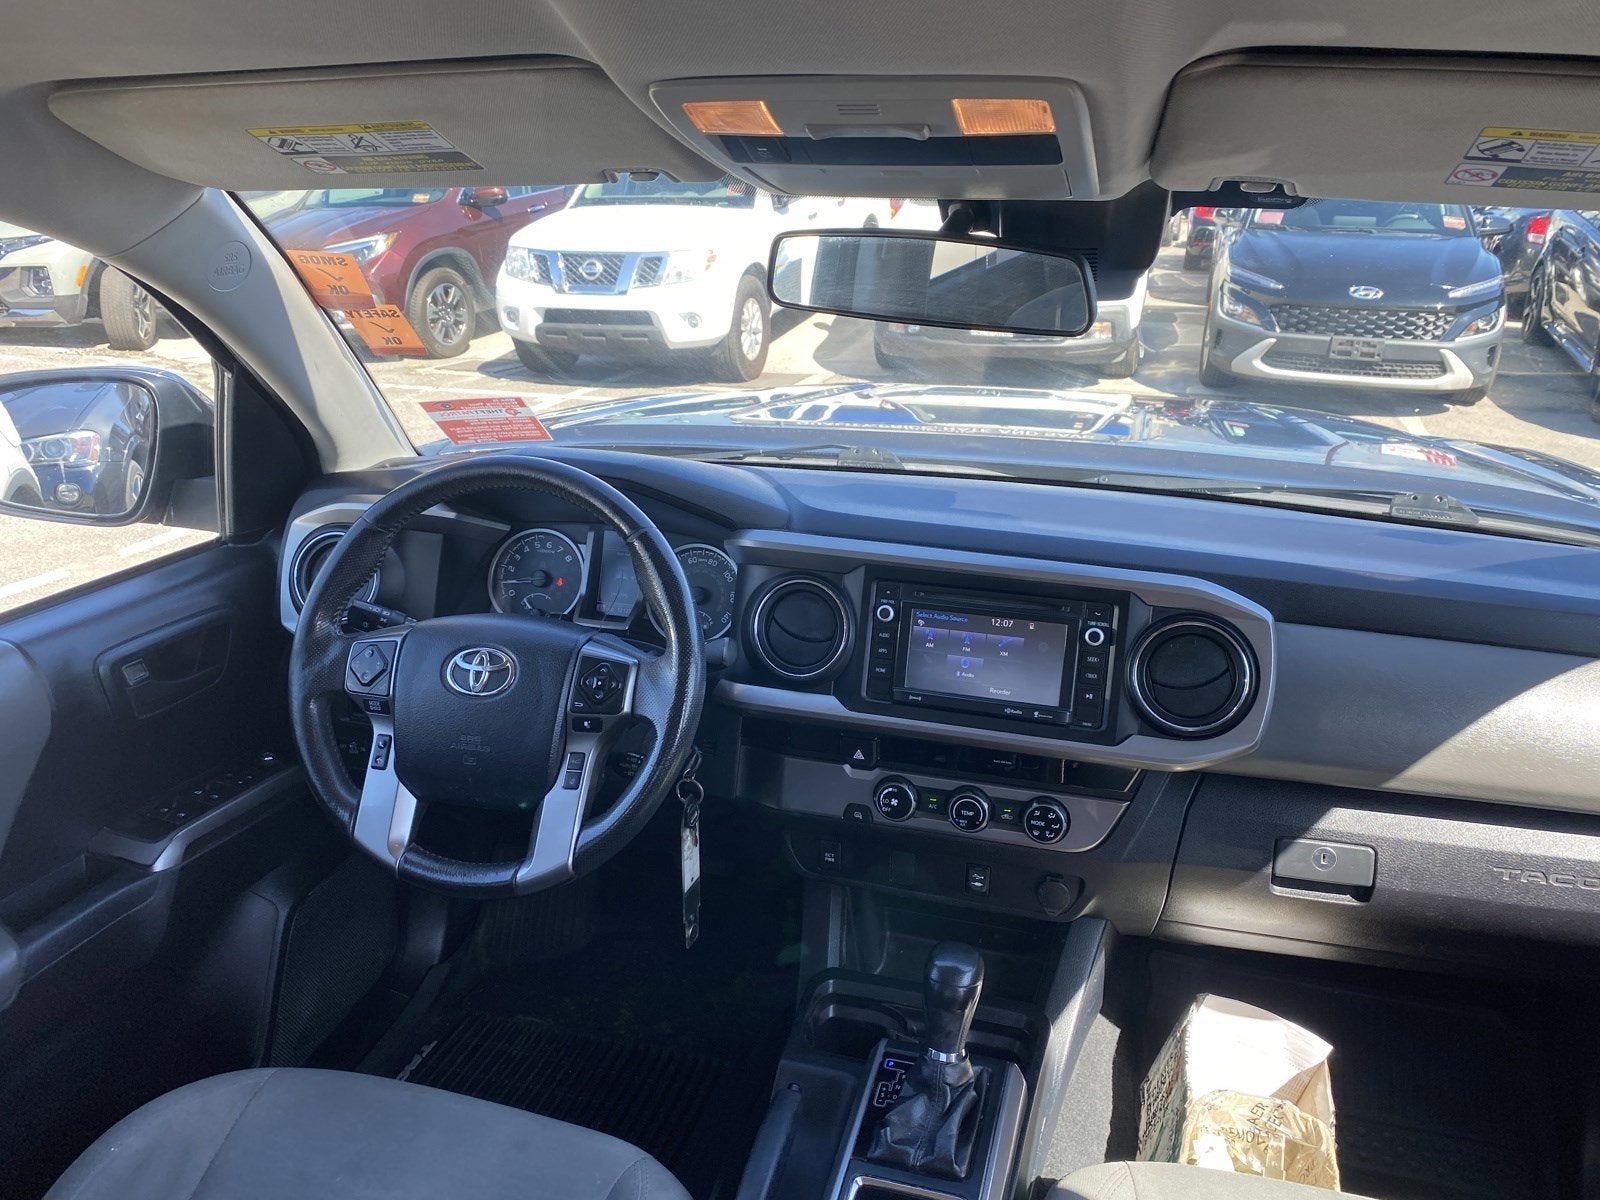 2018 Toyota Tacoma SR5